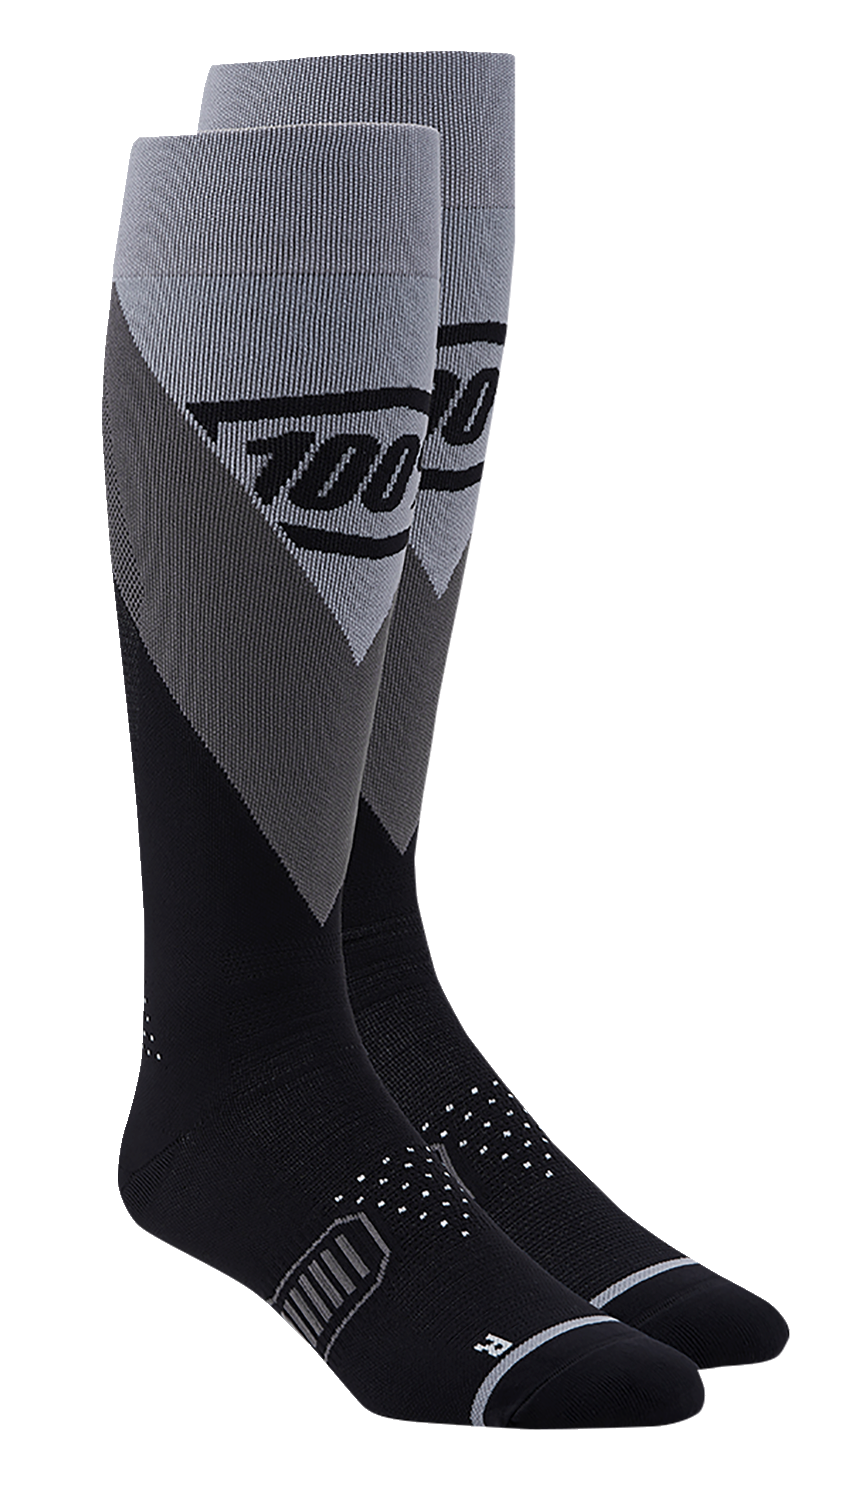 100% Hi-Side Performance Socks - Black - Large/XL 20054-00010